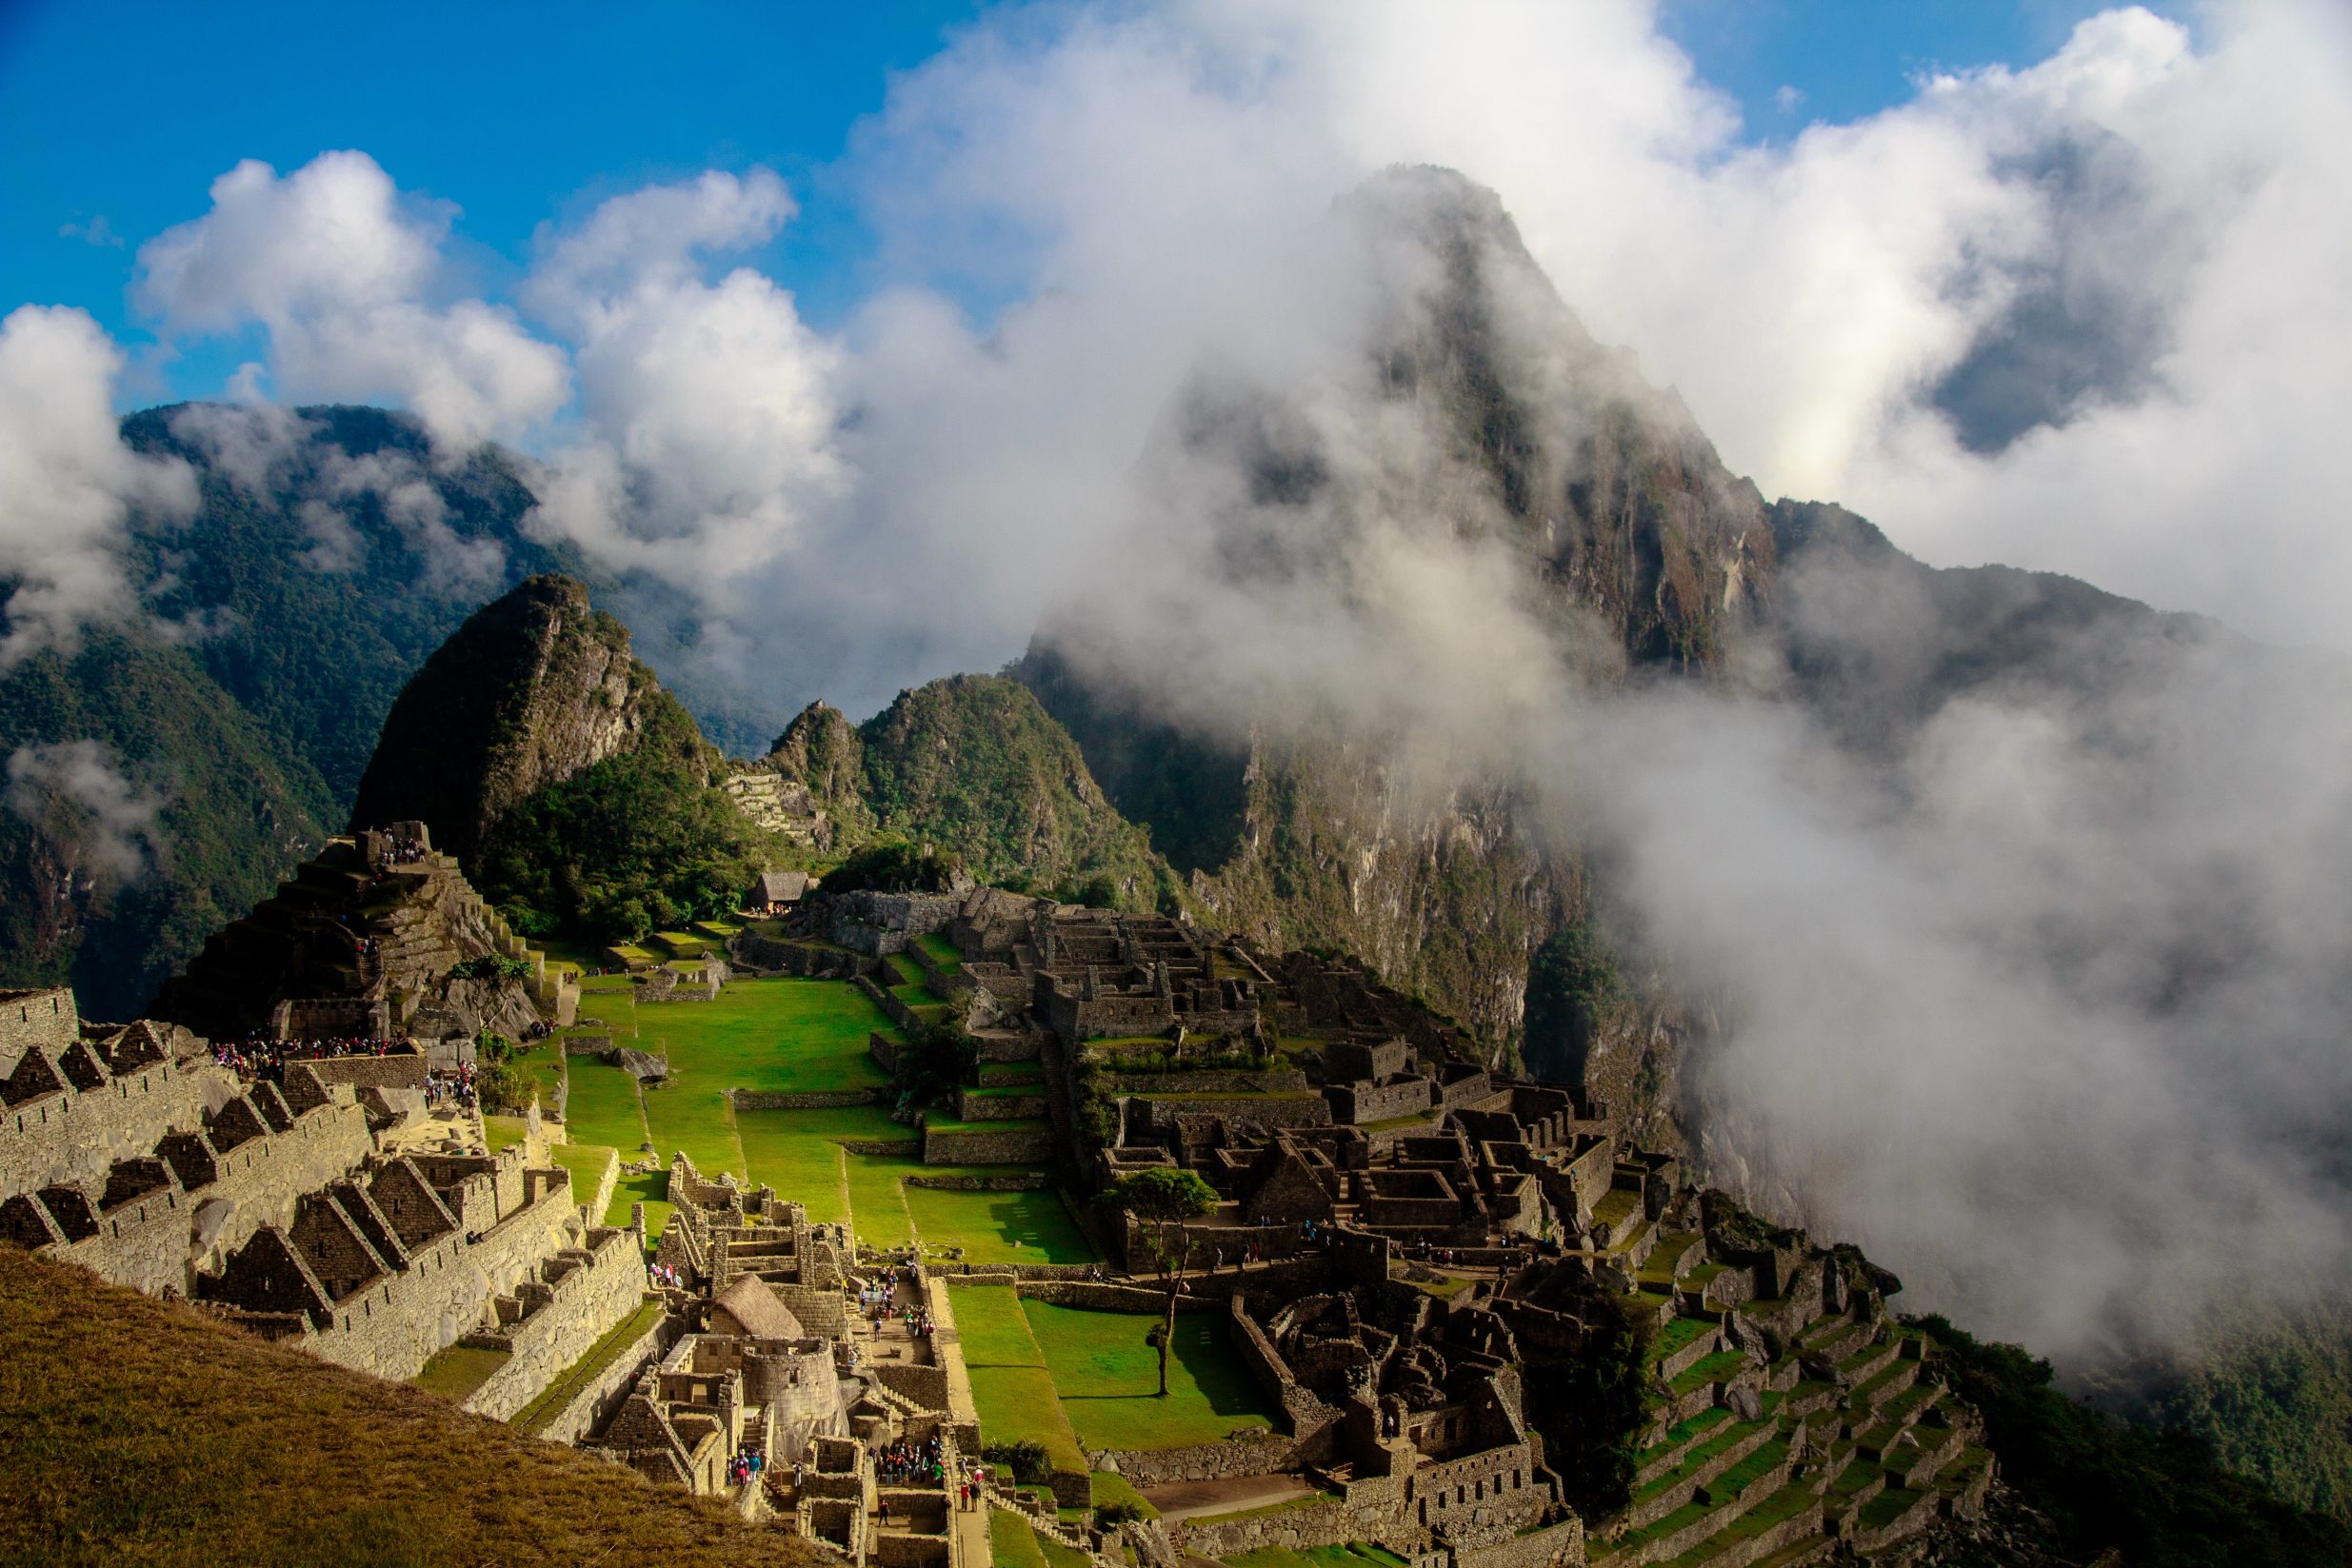 5 Things the Incas Taught Us, Machu Picchu, Peru Travel